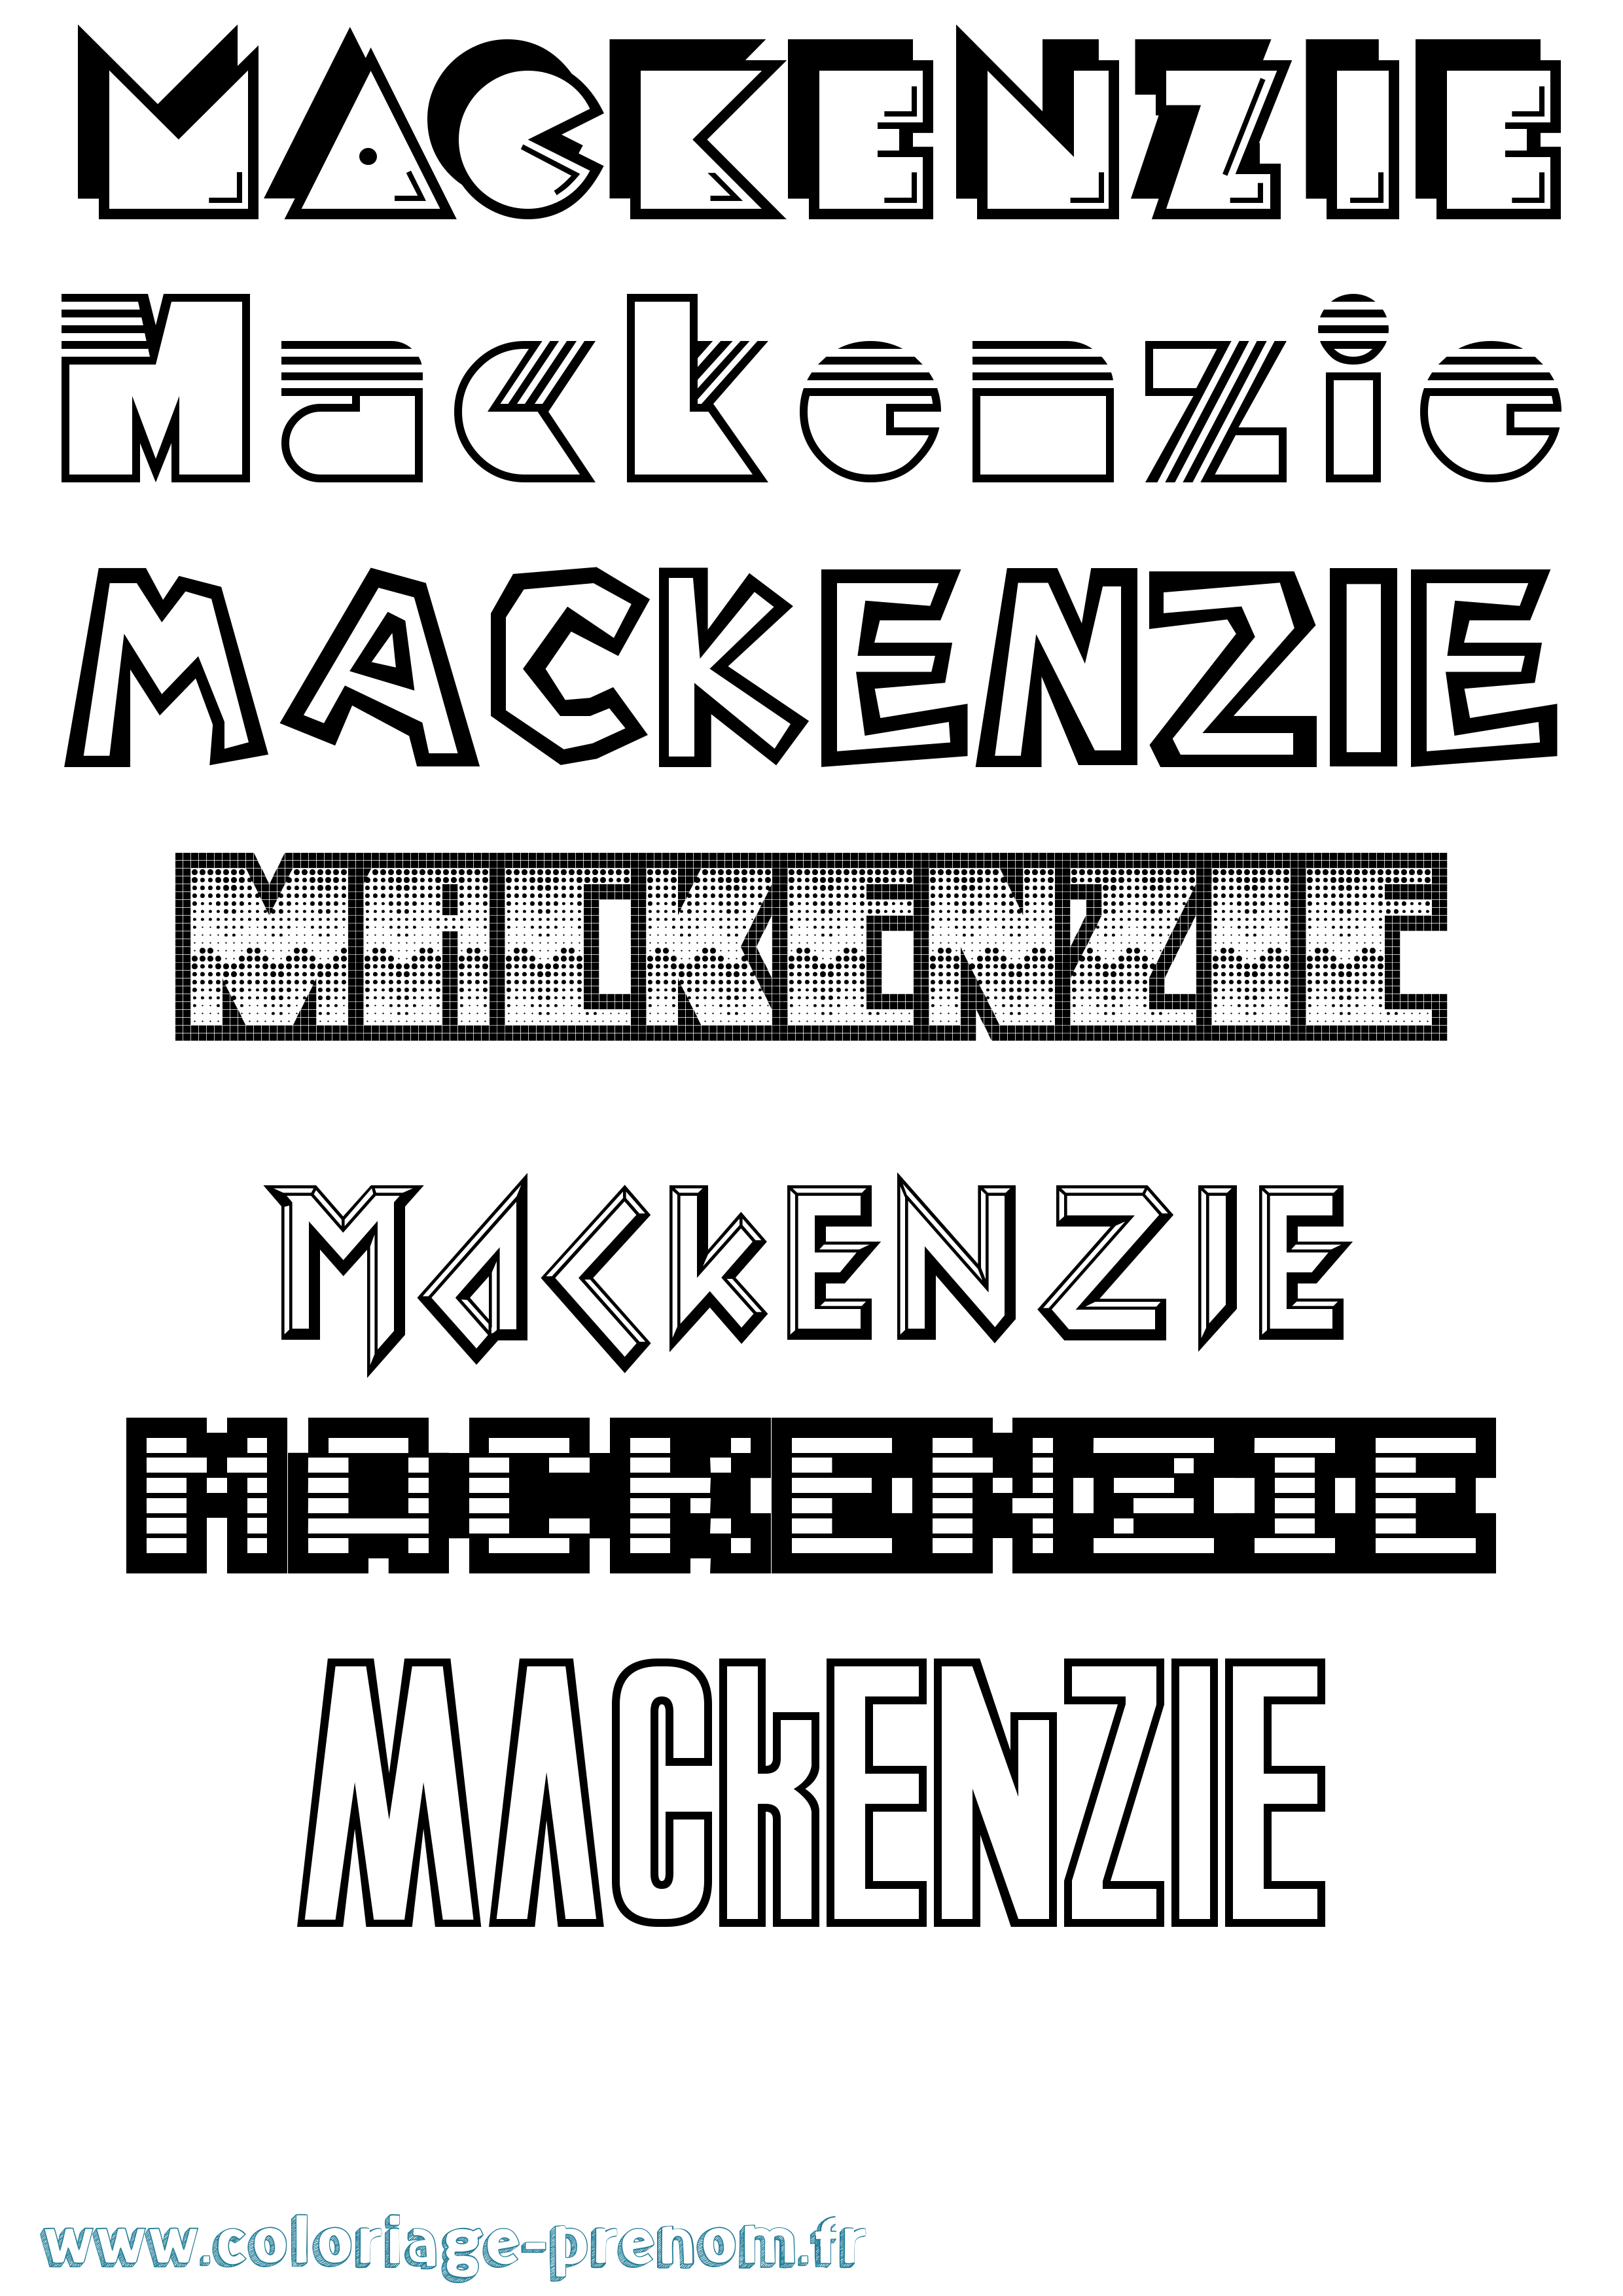 Coloriage prénom Mackenzie Jeux Vidéos